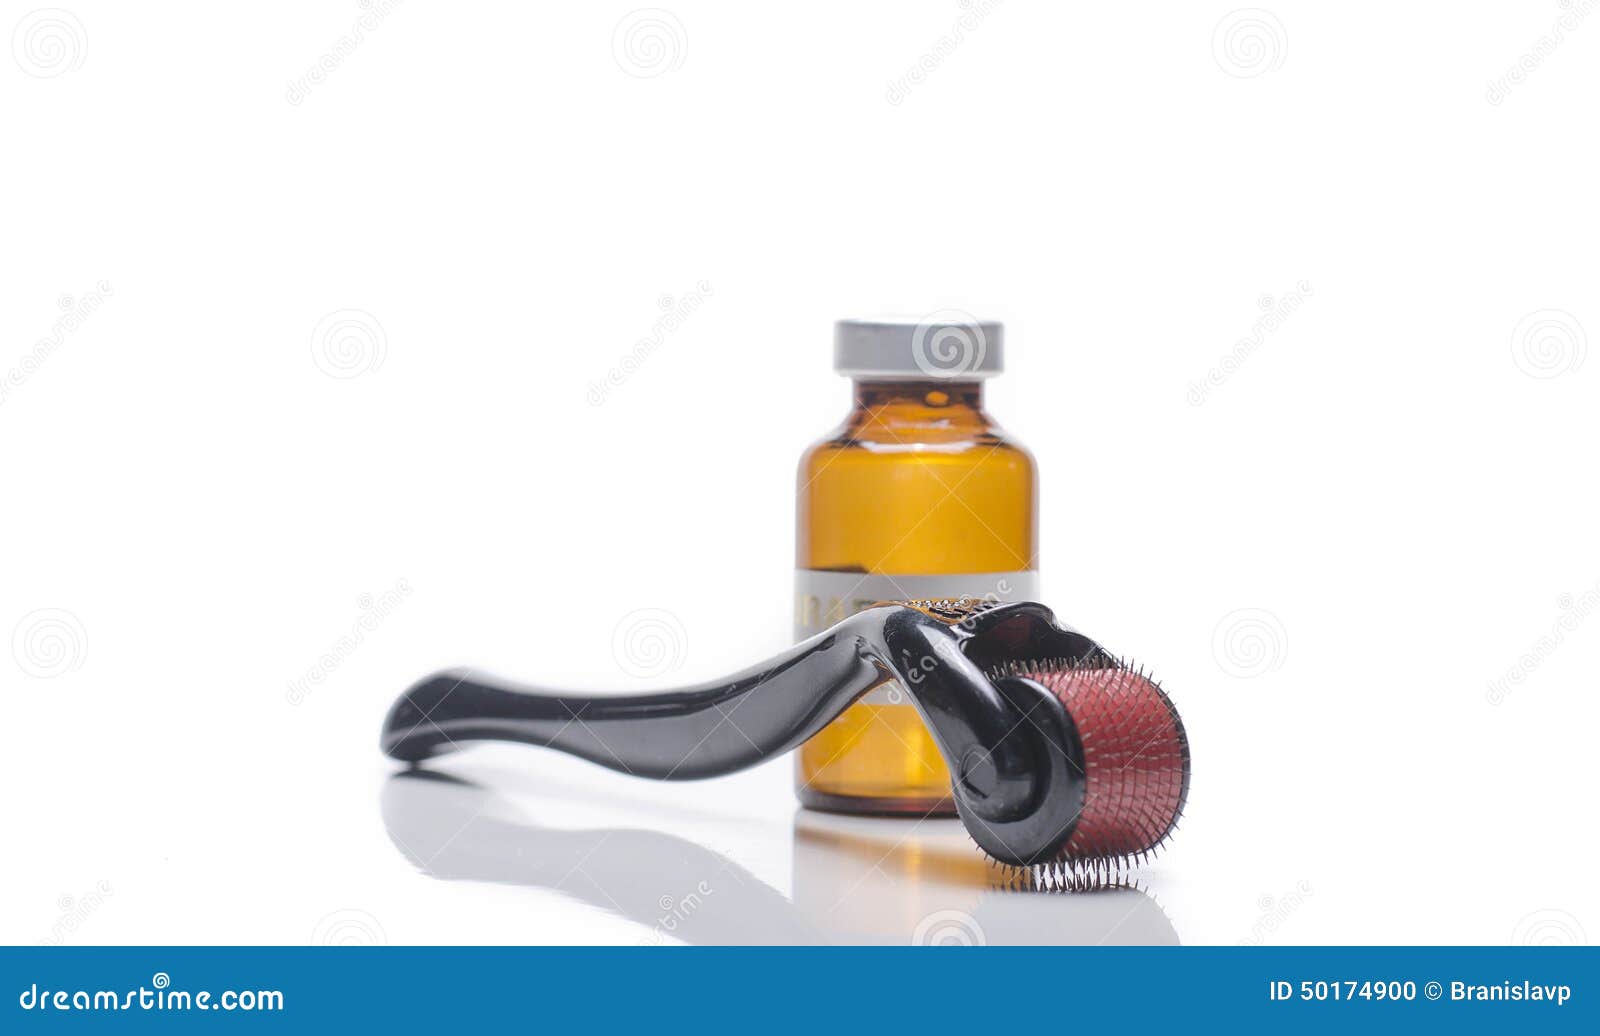 dermaroller tool for medical cosmetic procedure